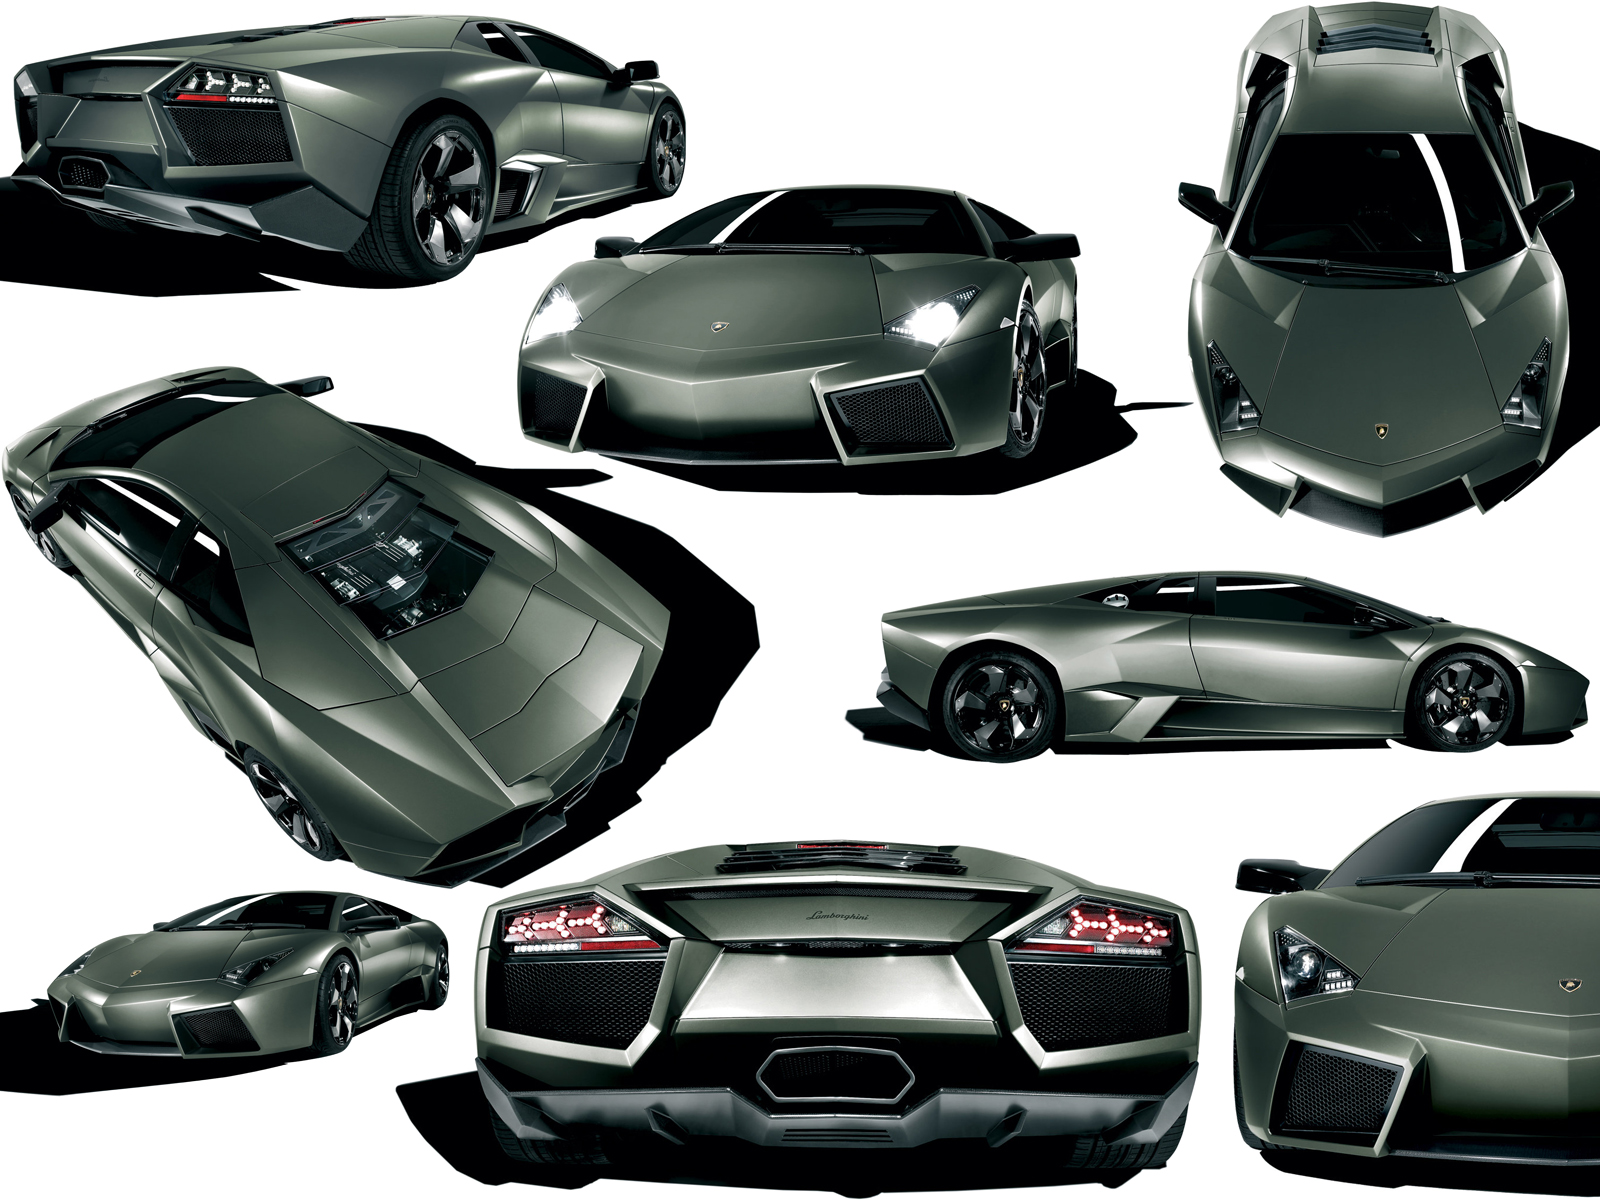 http://4.bp.blogspot.com/-rRvfGEzbRYc/TeToyXAnv_I/AAAAAAAAAOw/kHIAxguX5TU/s1600/Lamborghini%252BReventon%252BWallpapers-15.jpg